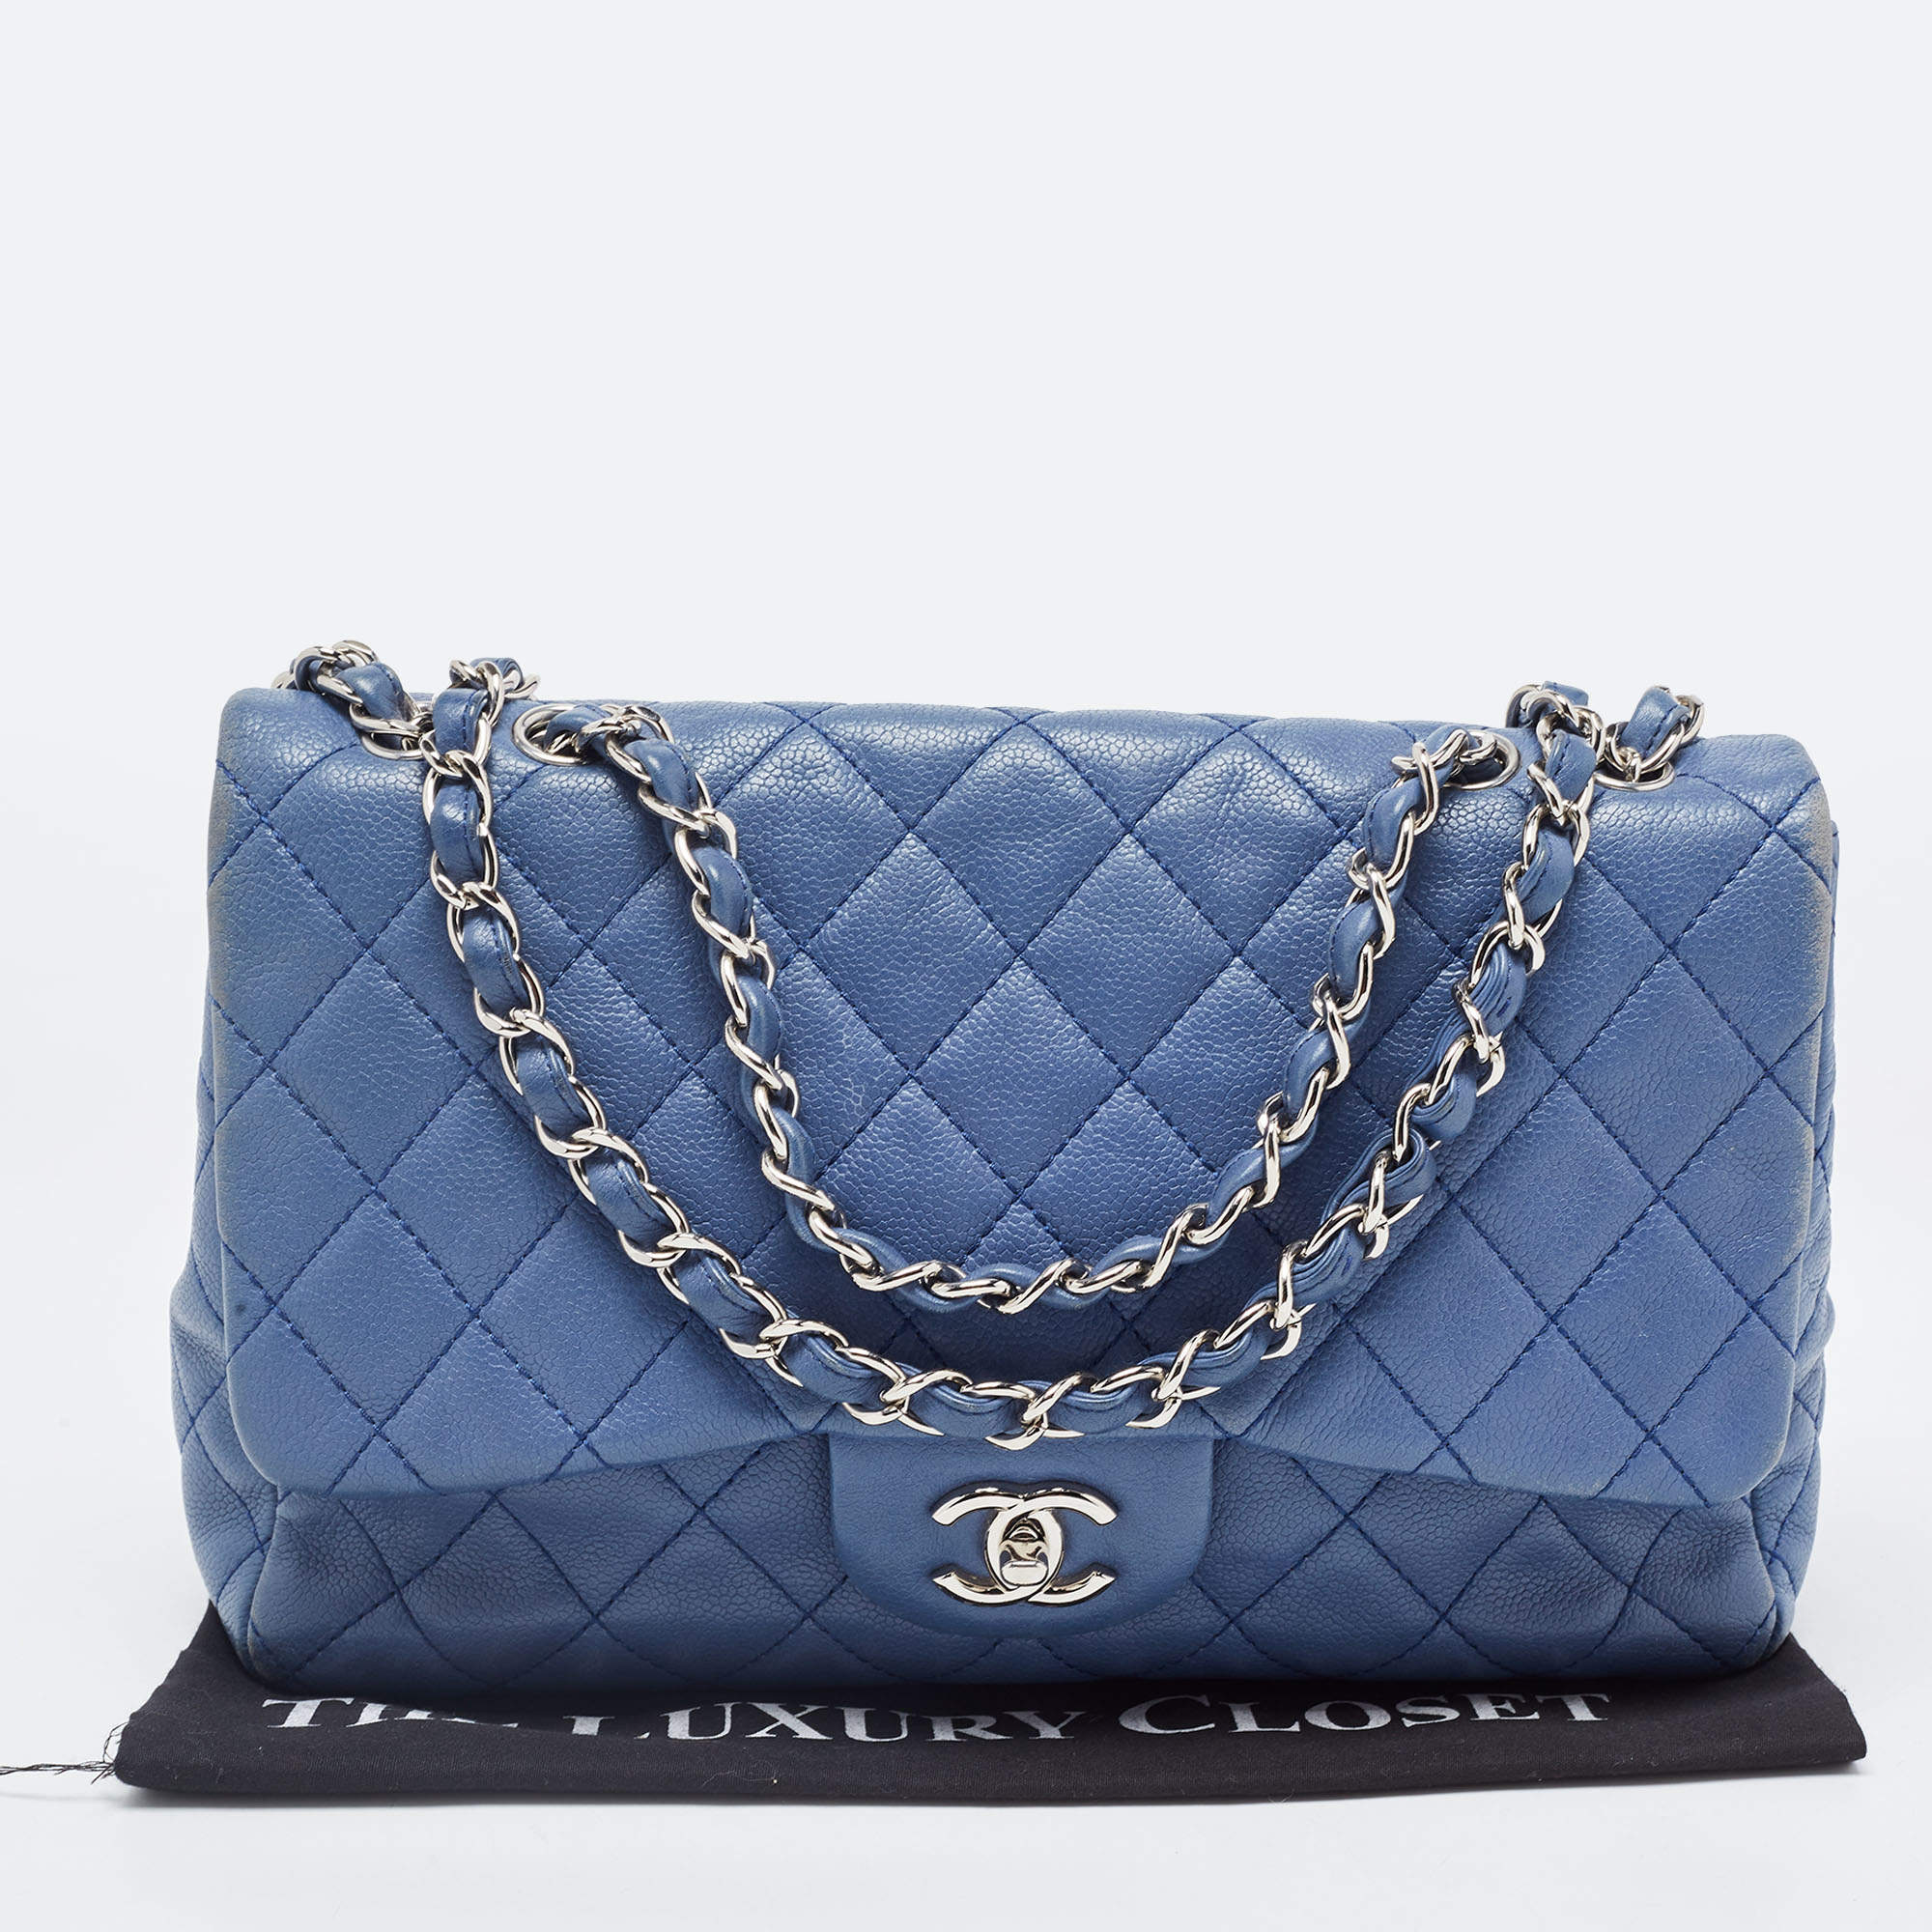 Fashion Jackson  How to Buy a Discounted Chanel Handbag on